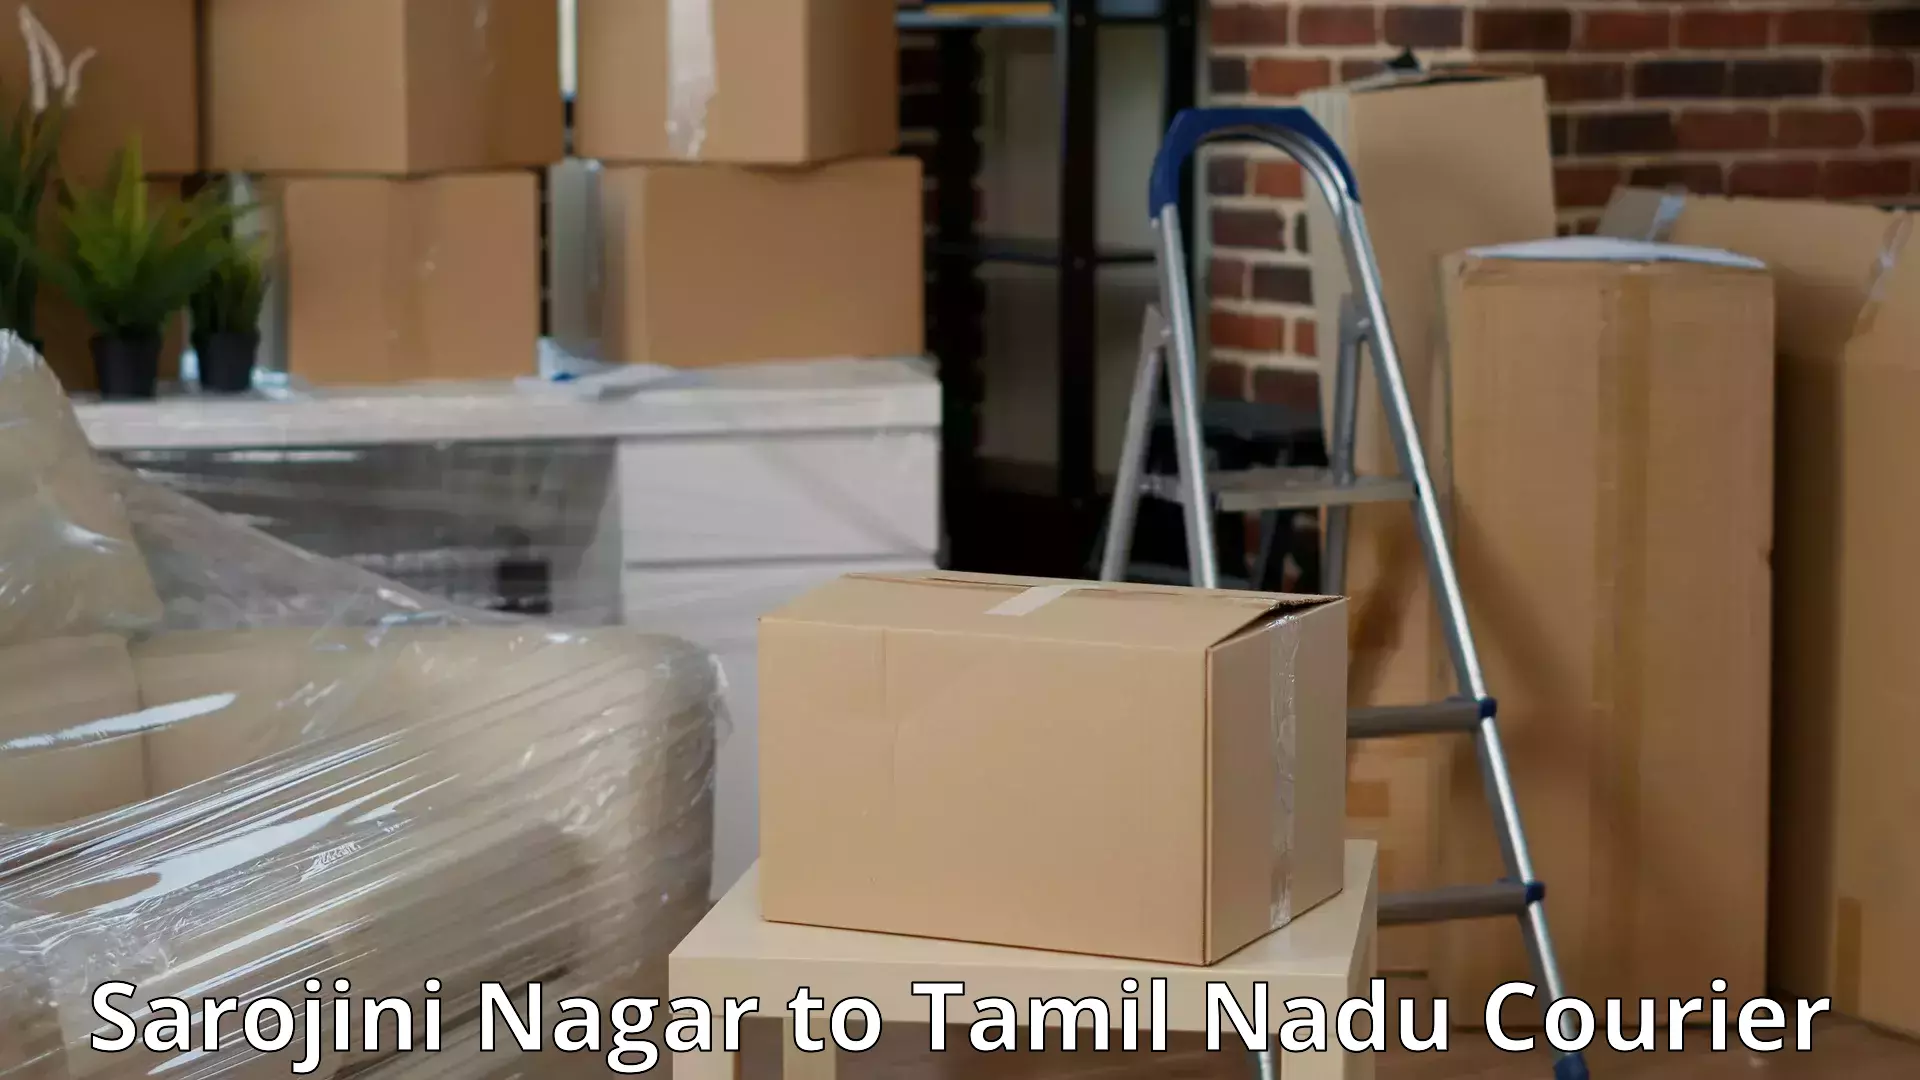 Affordable relocation solutions Sarojini Nagar to Chennai